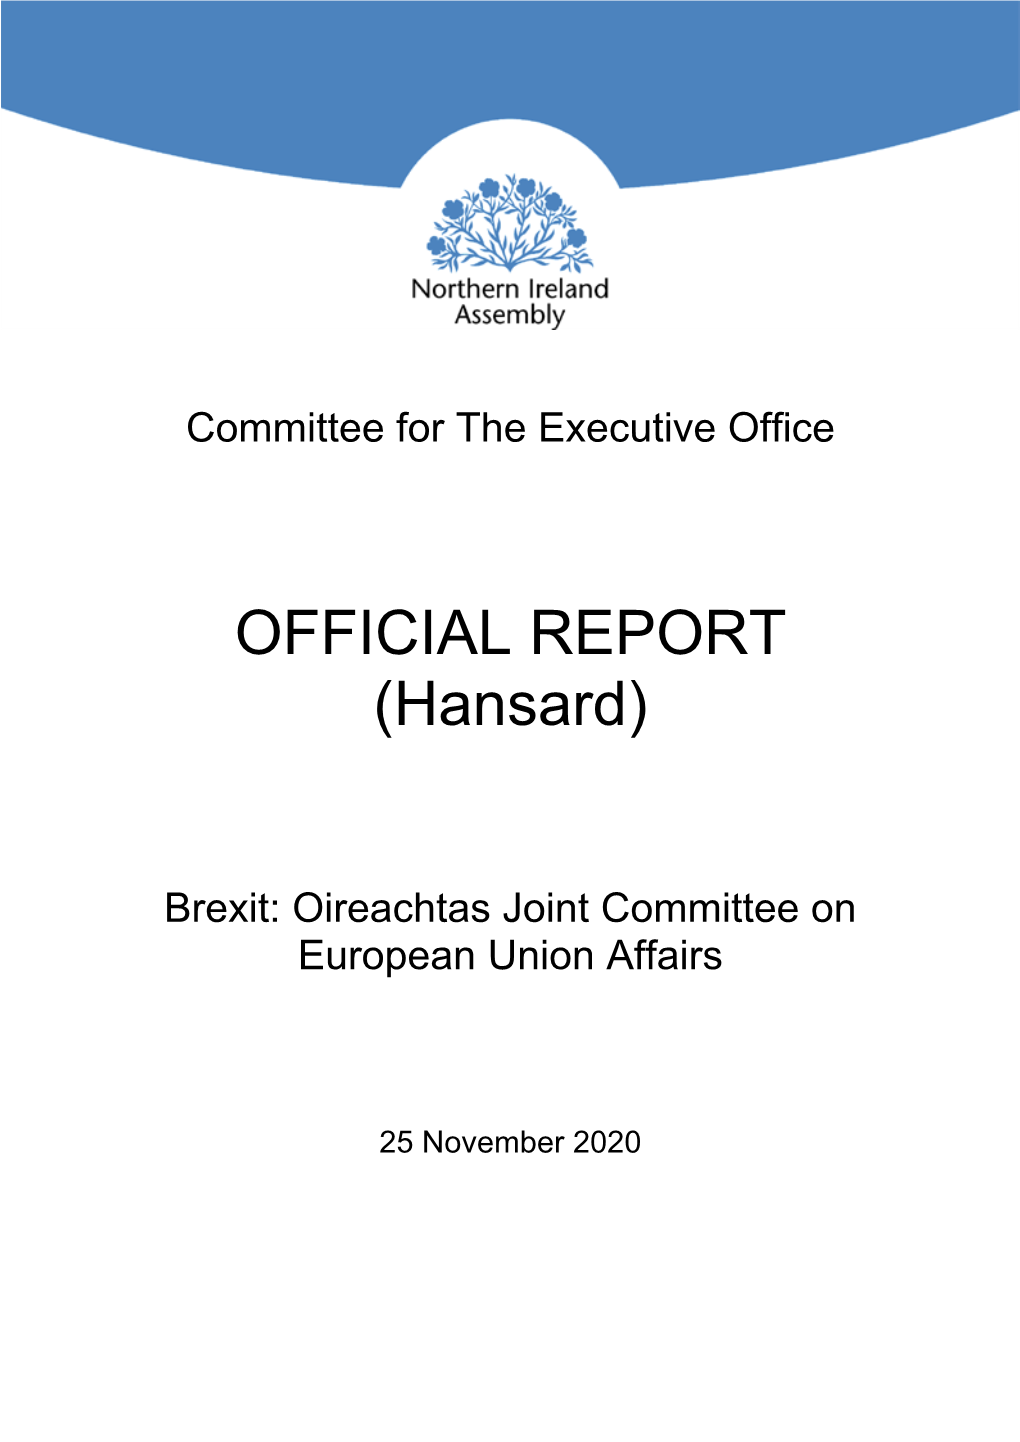 Brexit: Oireachtas Joint Committee on European Union Affairs